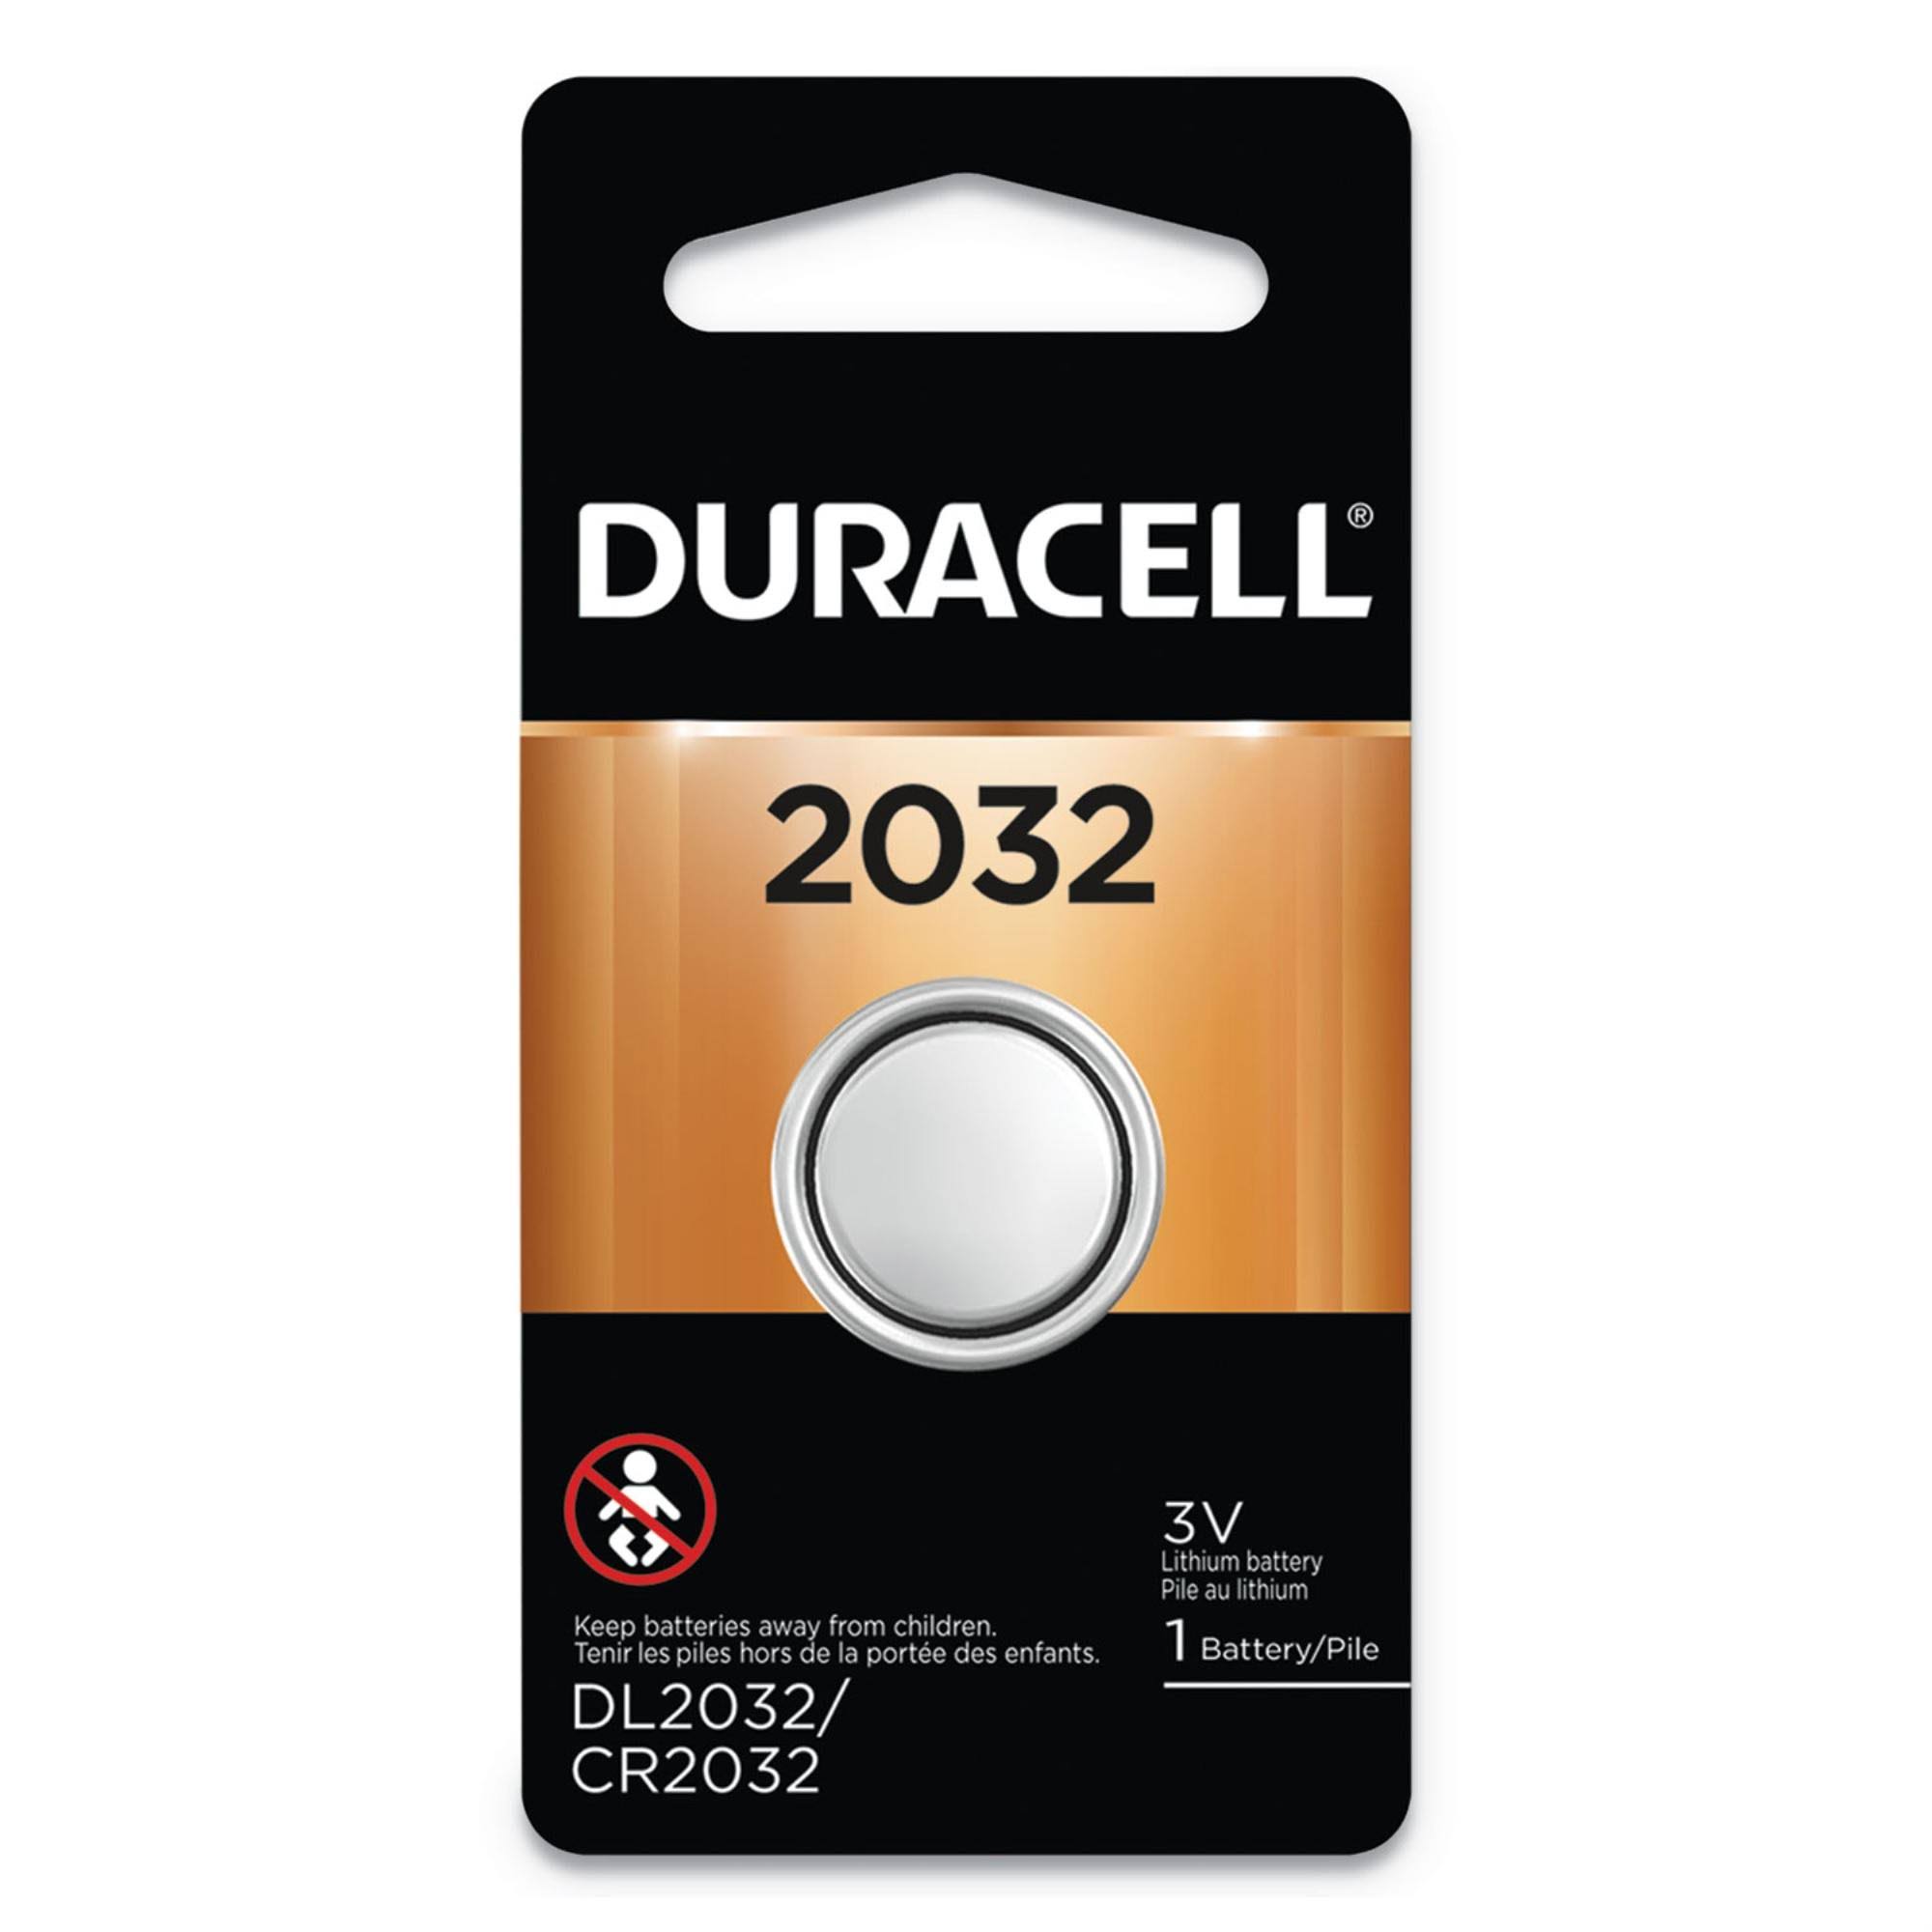 Duracell Medical 2032 Lithium Battery - 3V